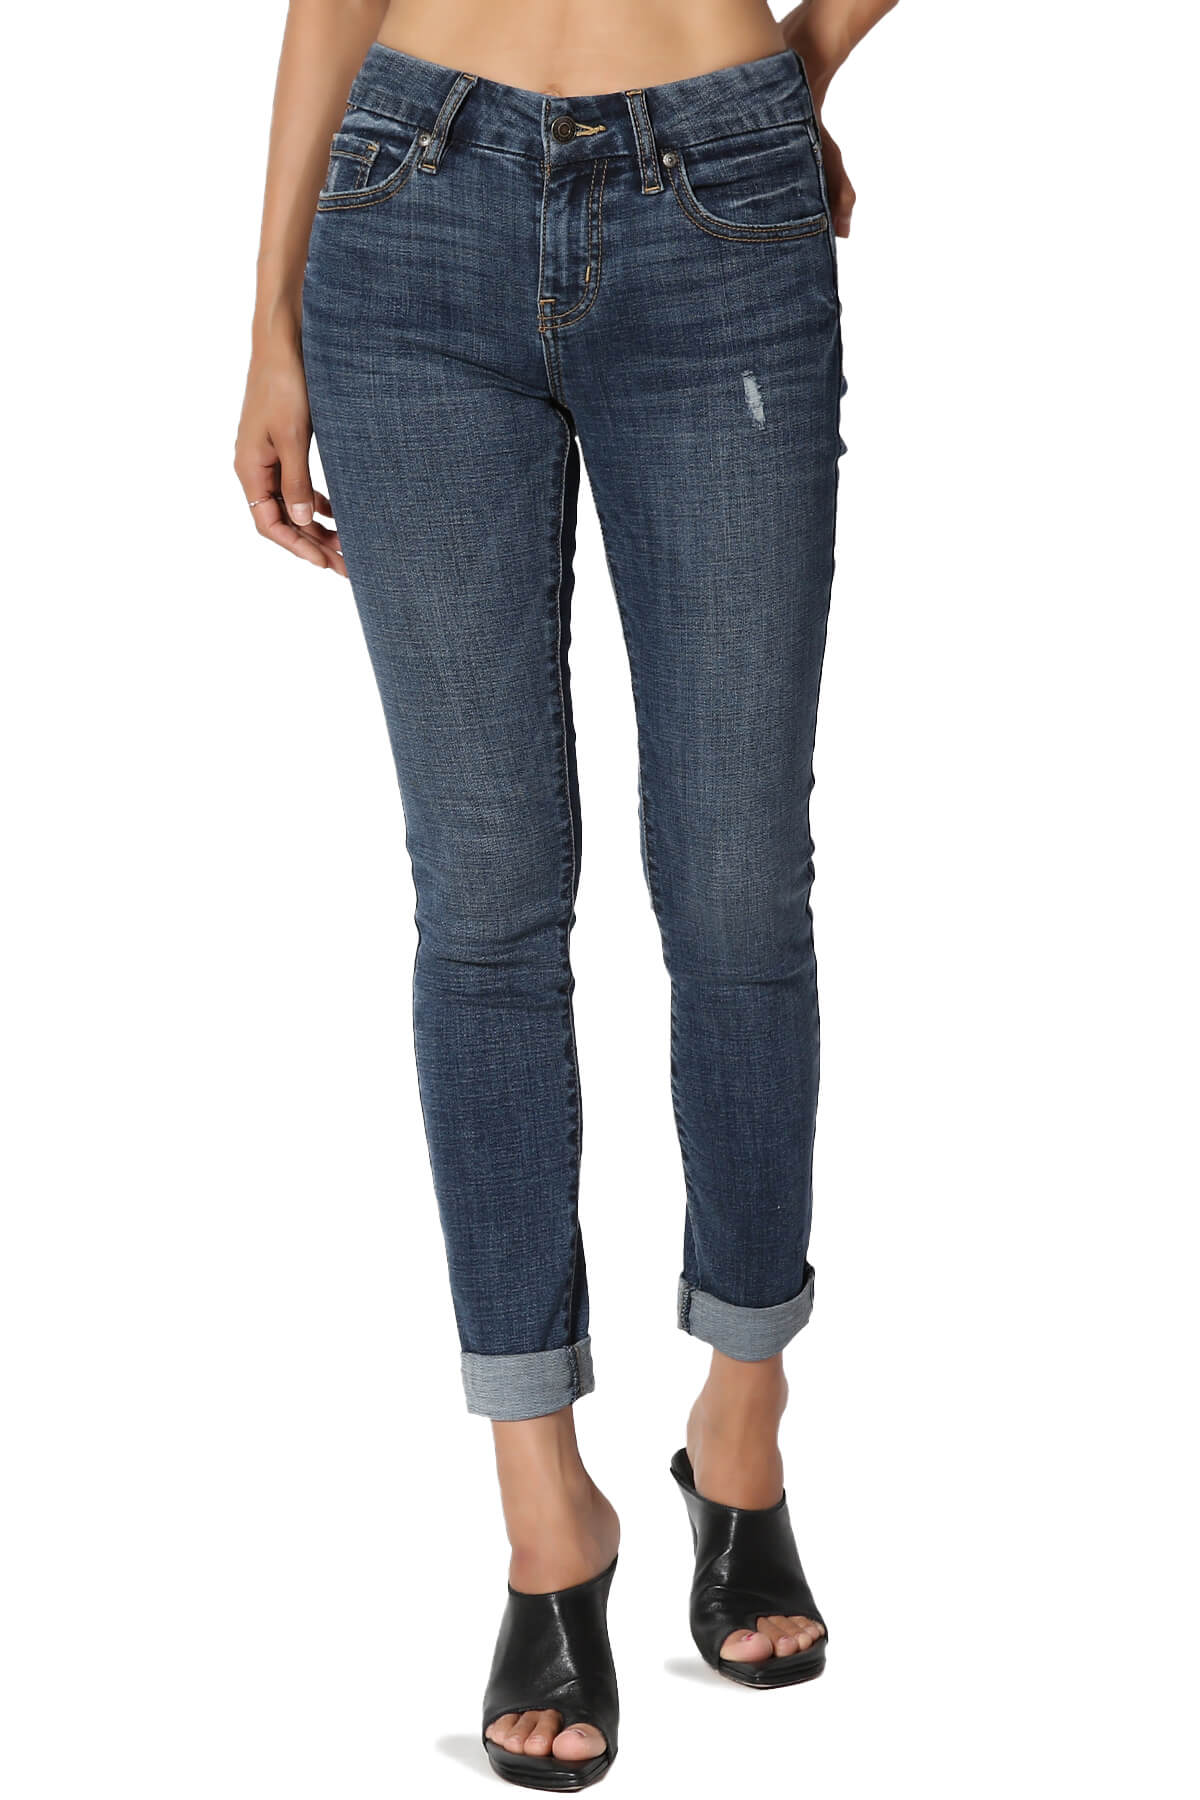 TheMogan Women's 0~3X Roll Up Mid Rise Dark Vintage Wash Tencel Denim Skinny Jeans - image 1 of 7